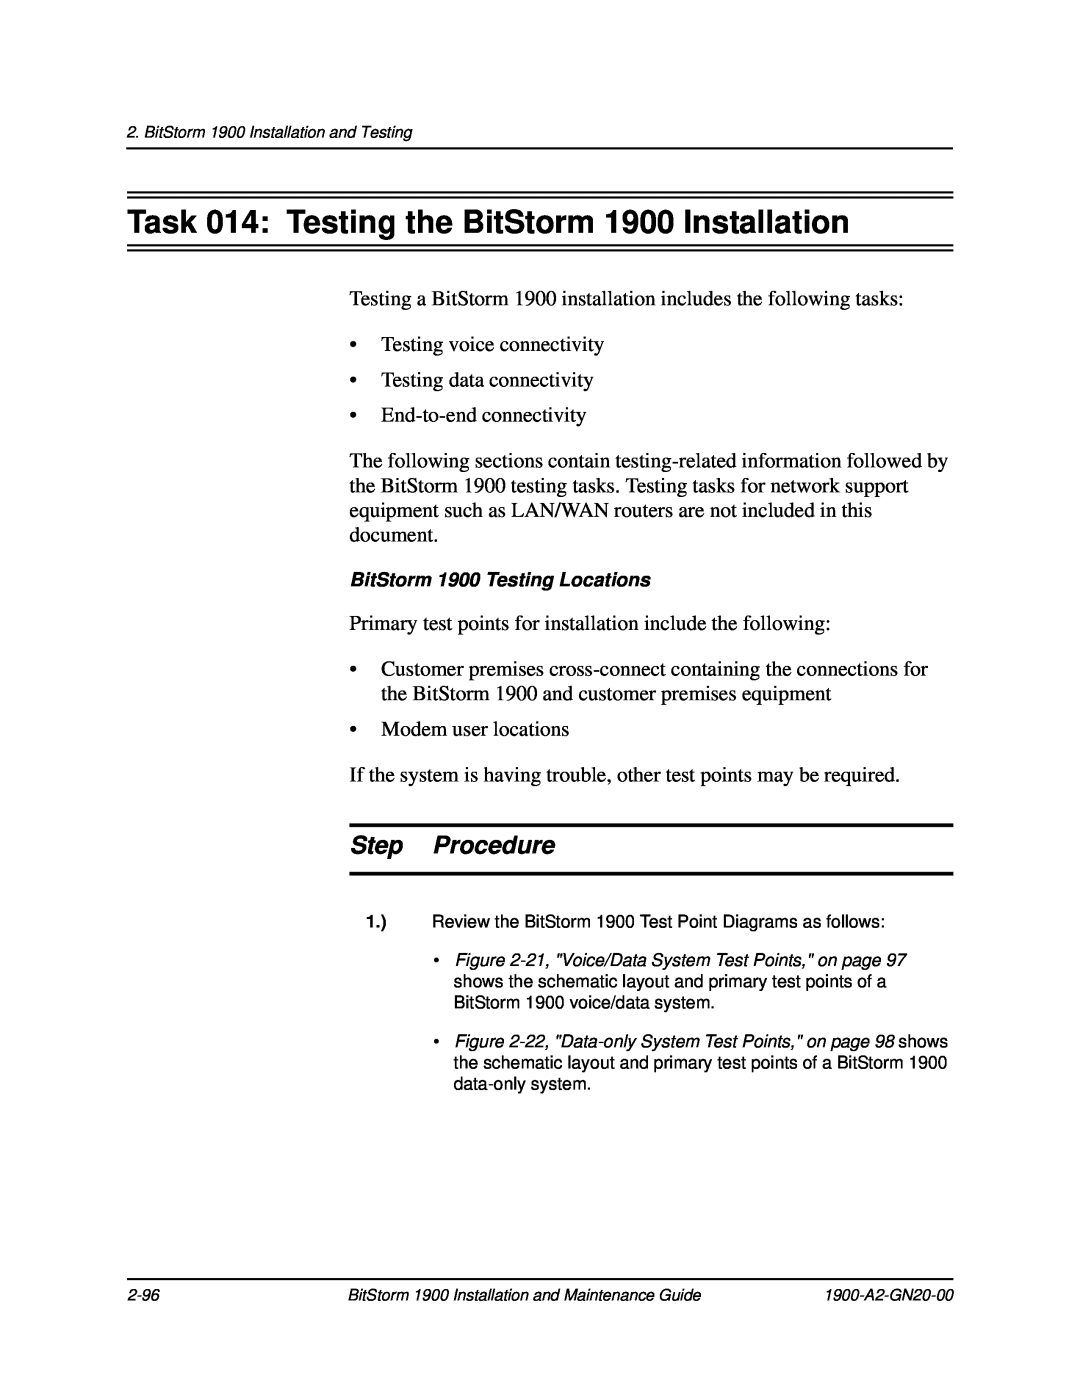 Paradyne manual Task 014 Testing the BitStorm 1900 Installation, Step Procedure 